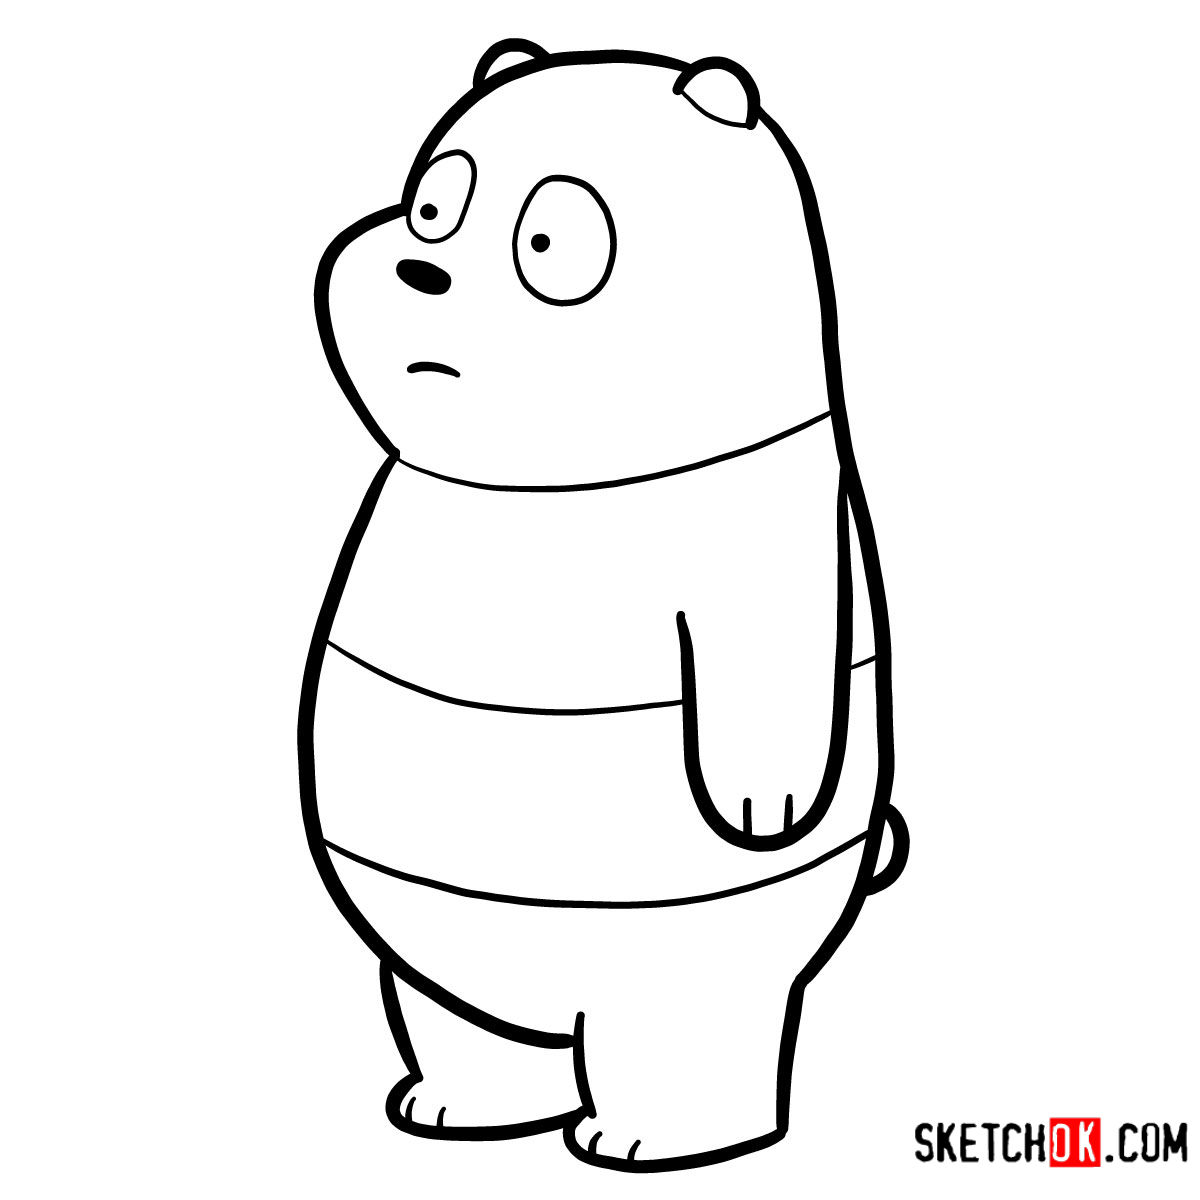 How to draw Panda Bear | We Bare Bears - step 08